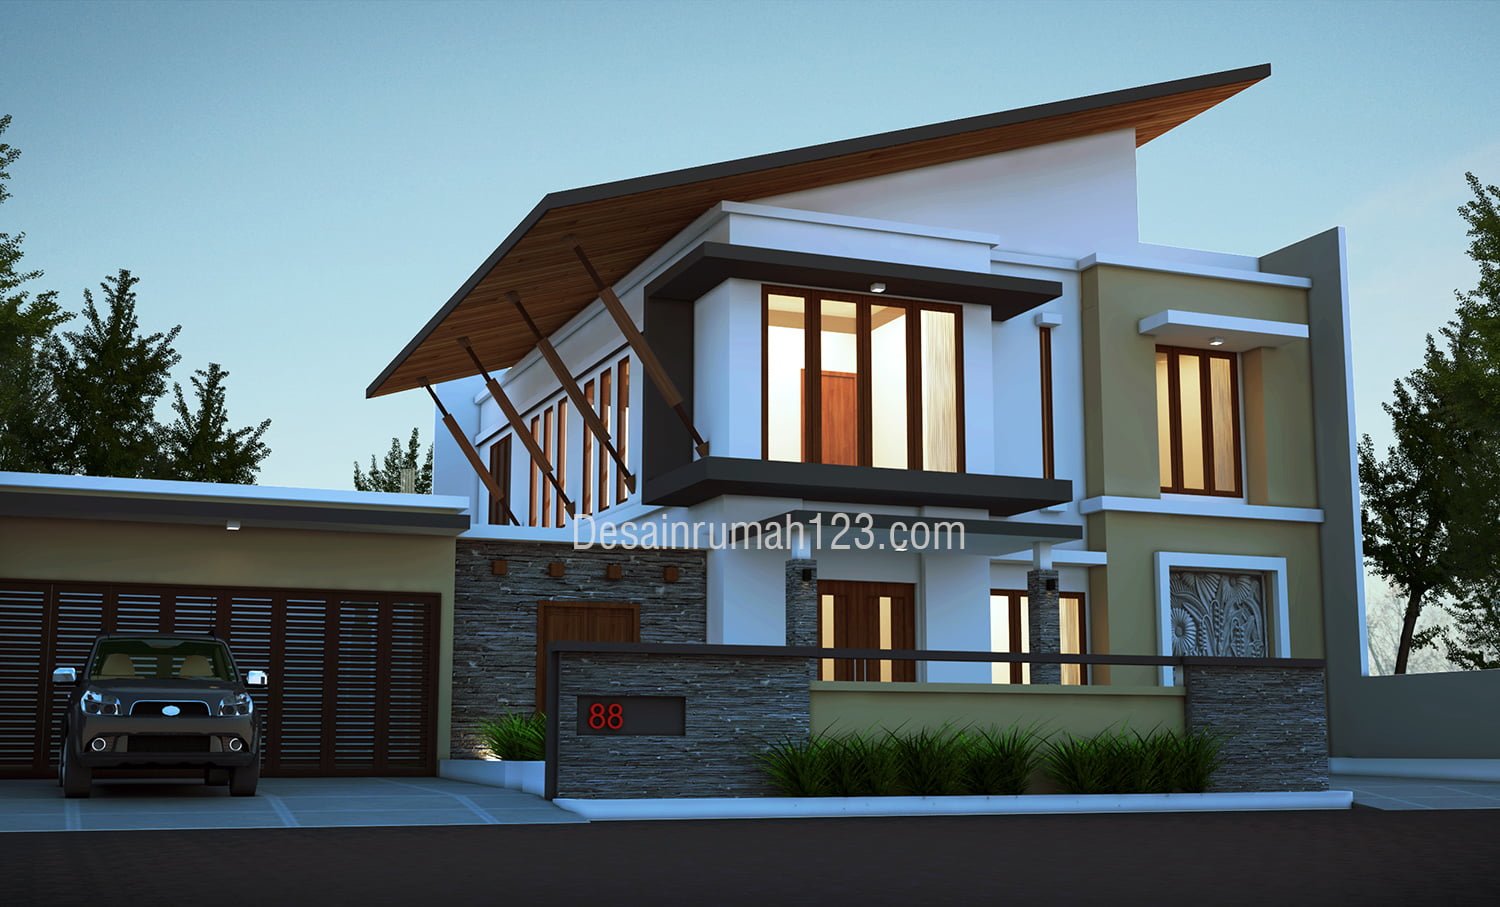 15 Contoh Desain Rumah Minimalis Modern 2 Lantai Semarang Paling